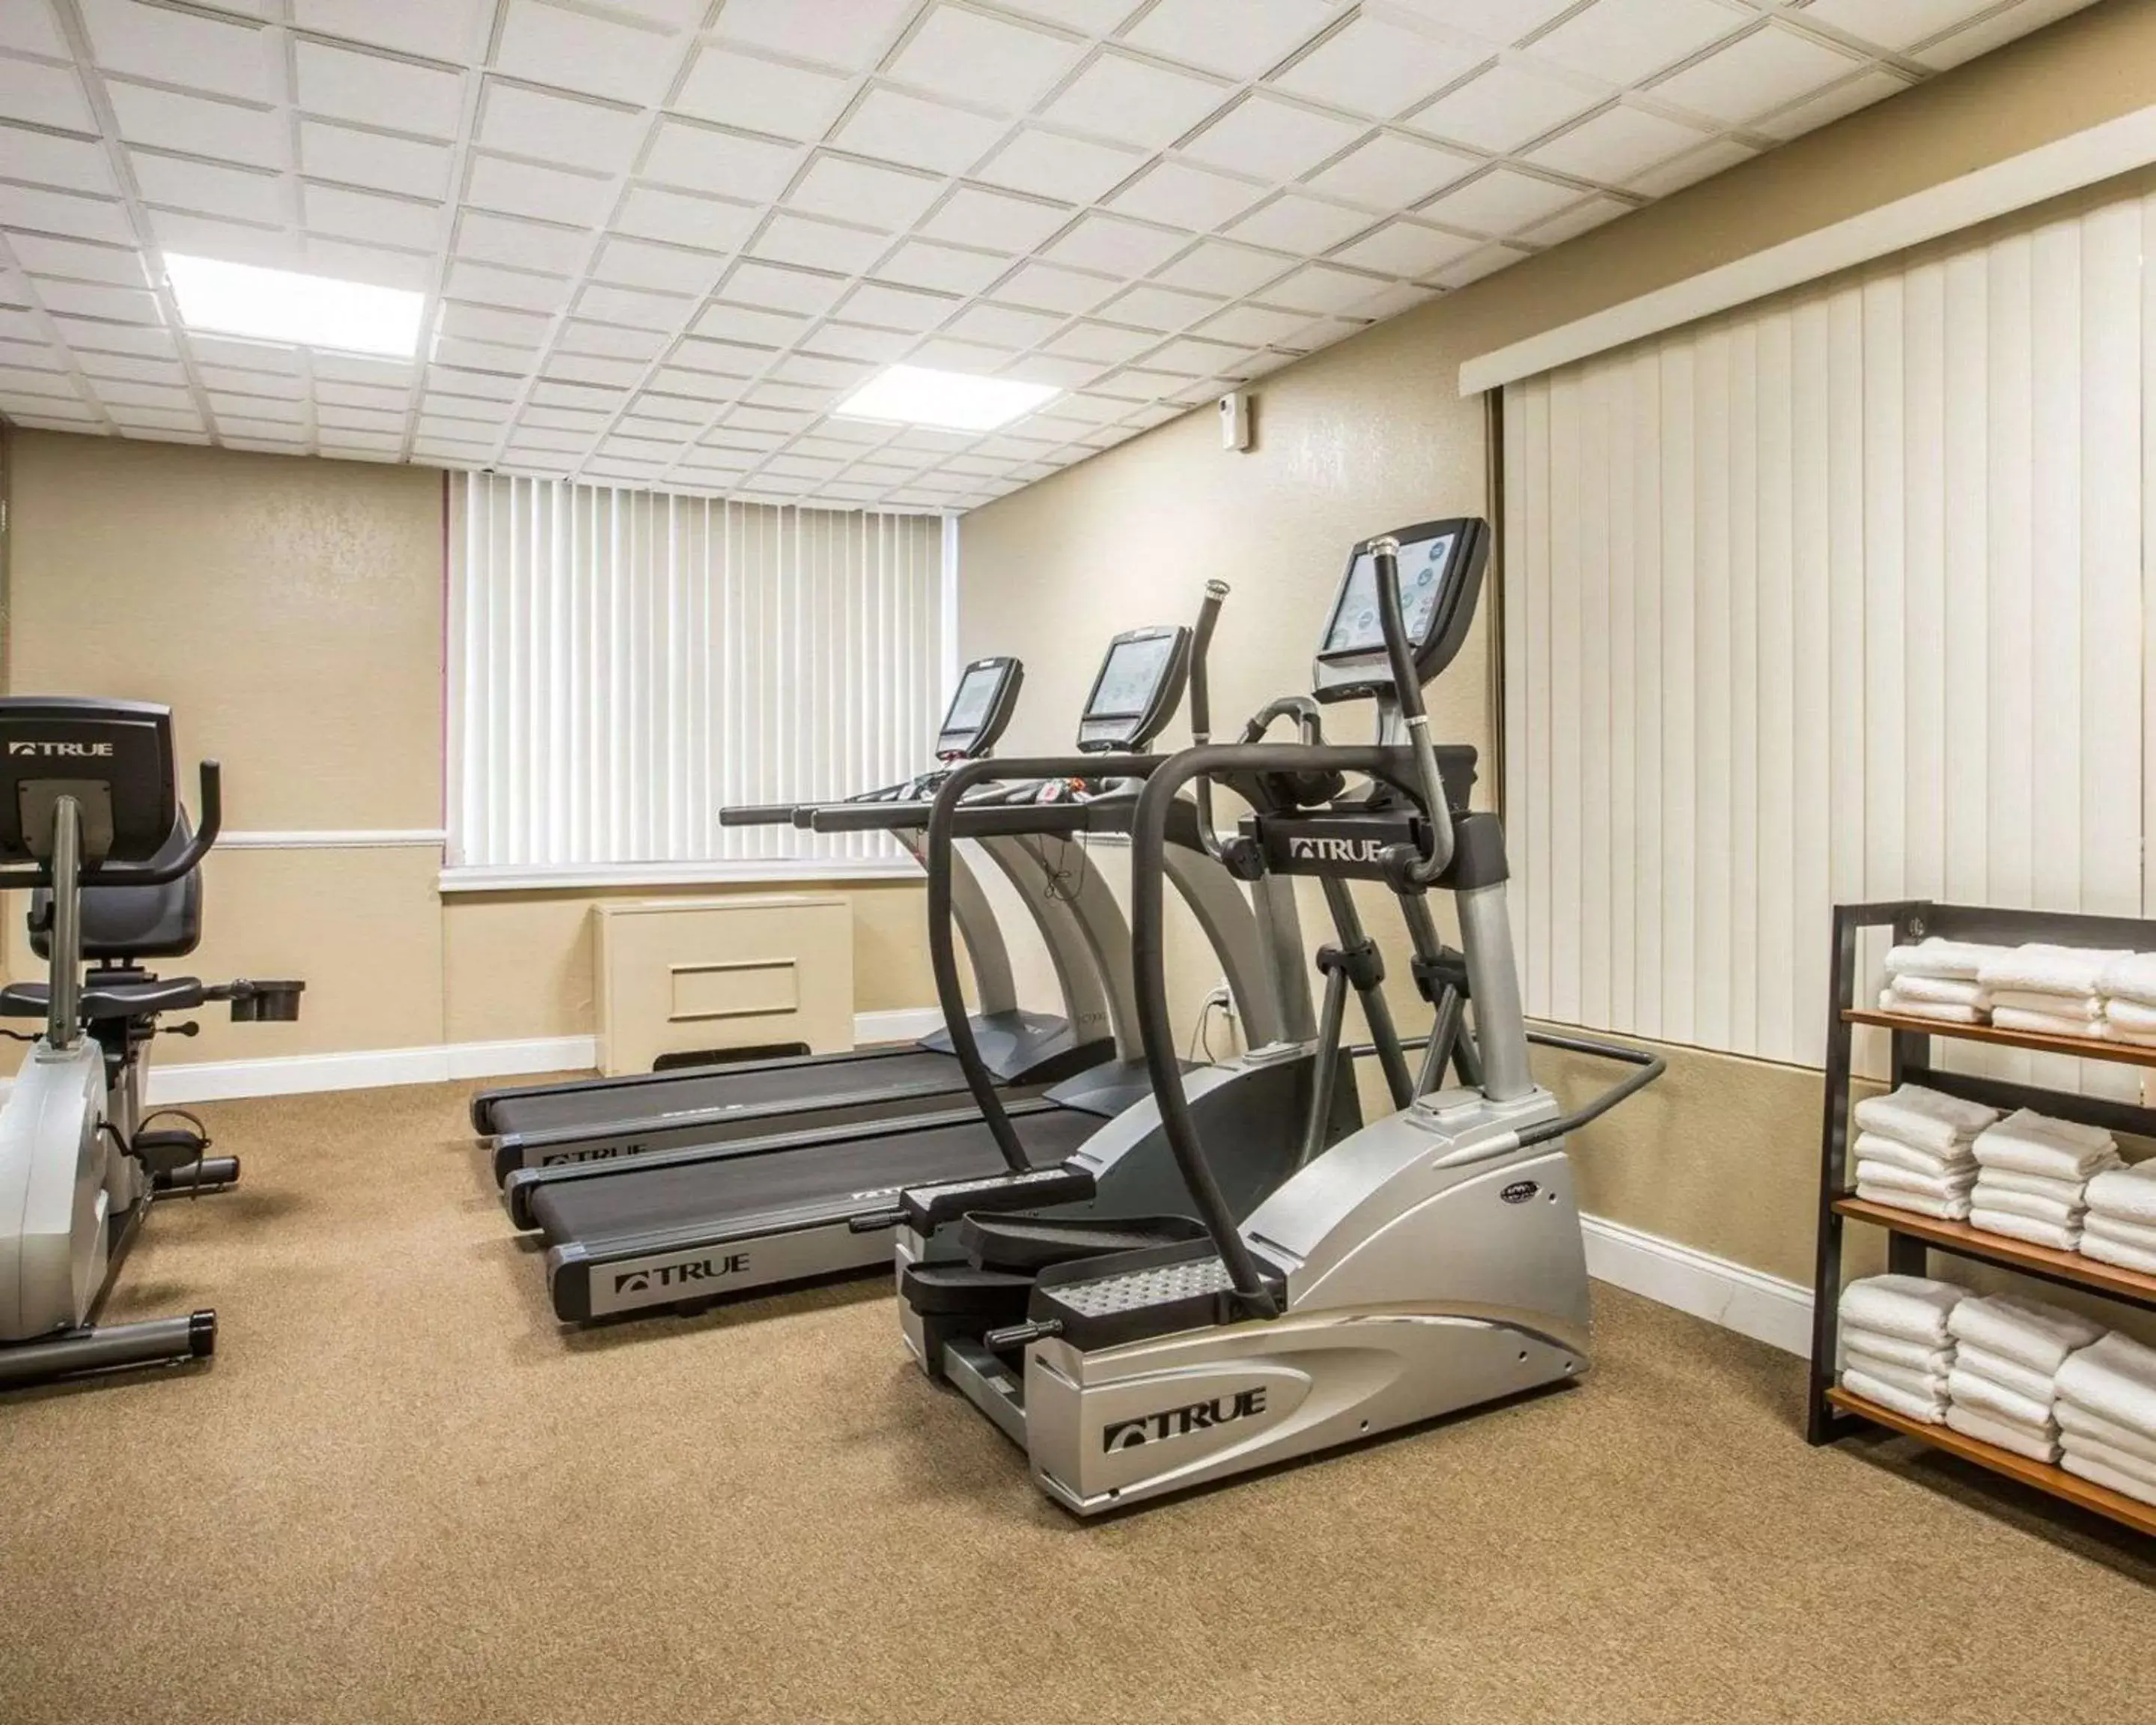 Fitness centre/facilities, Fitness Center/Facilities in Quality Inn Massena